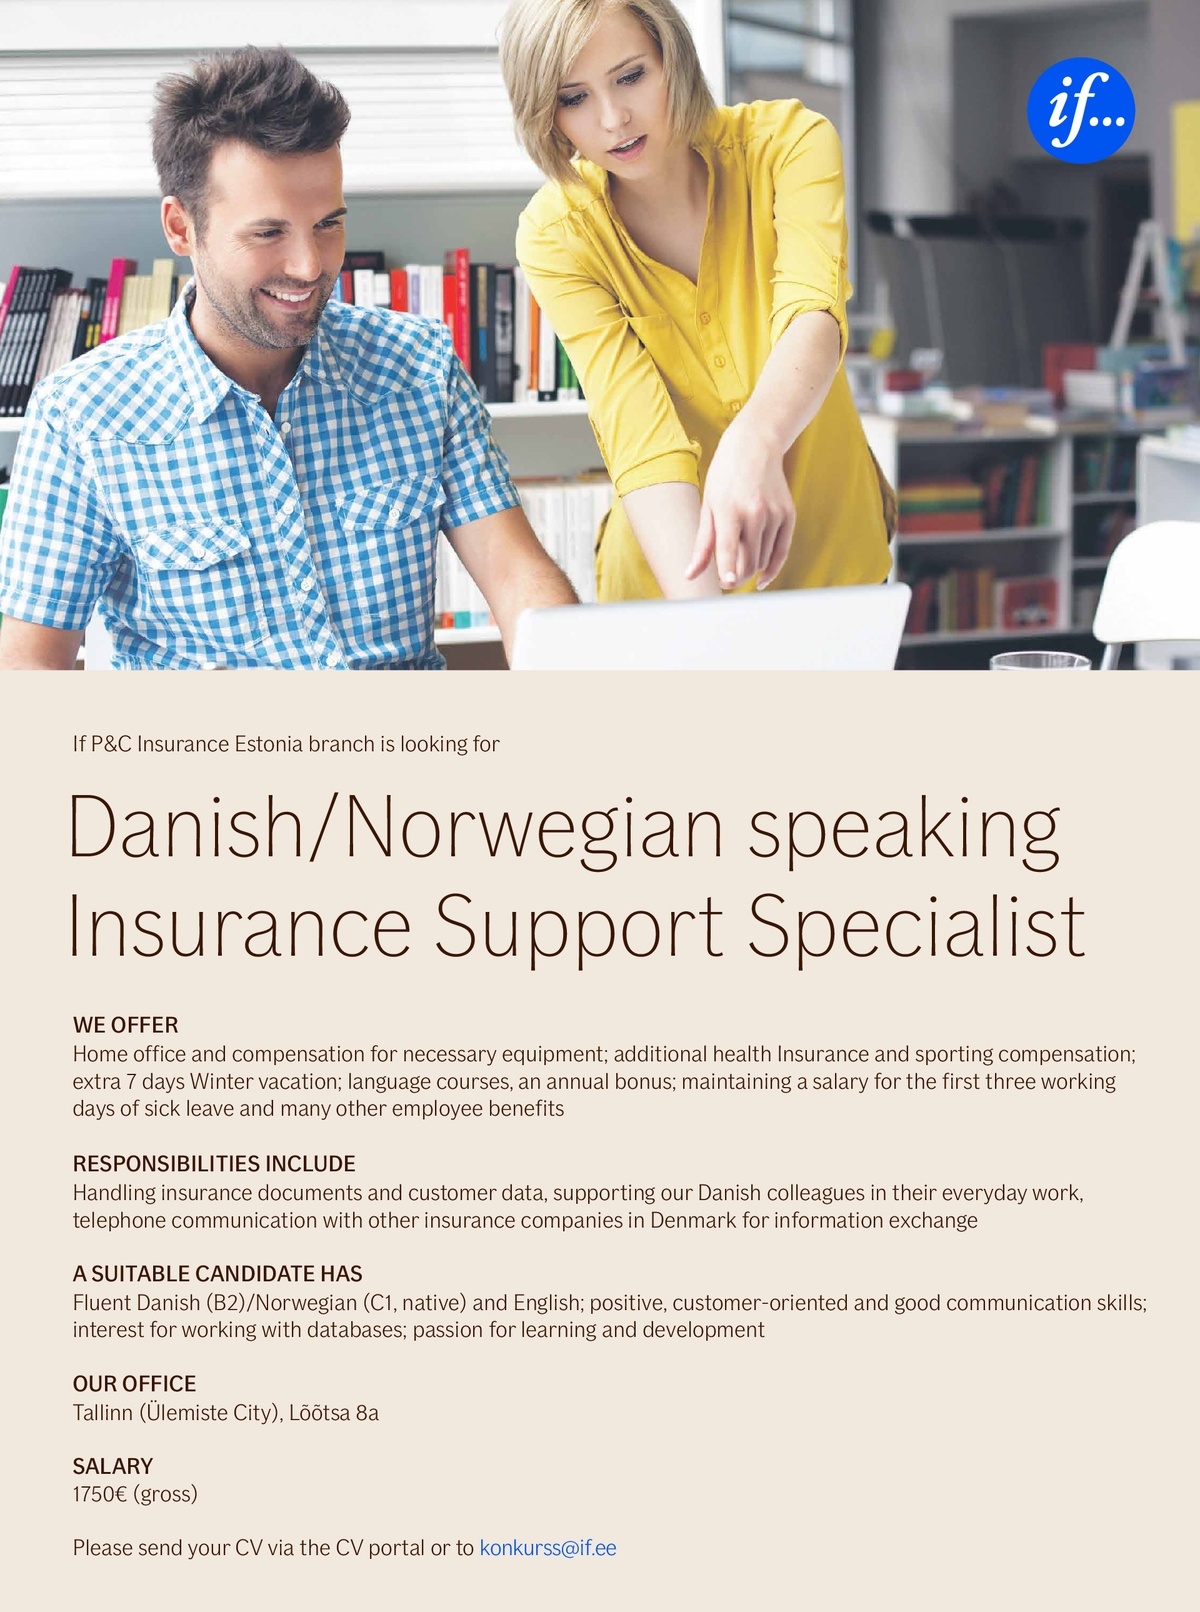 If P&C Insurance AS Danish/Norwegian speaking Insurance Support Specialist